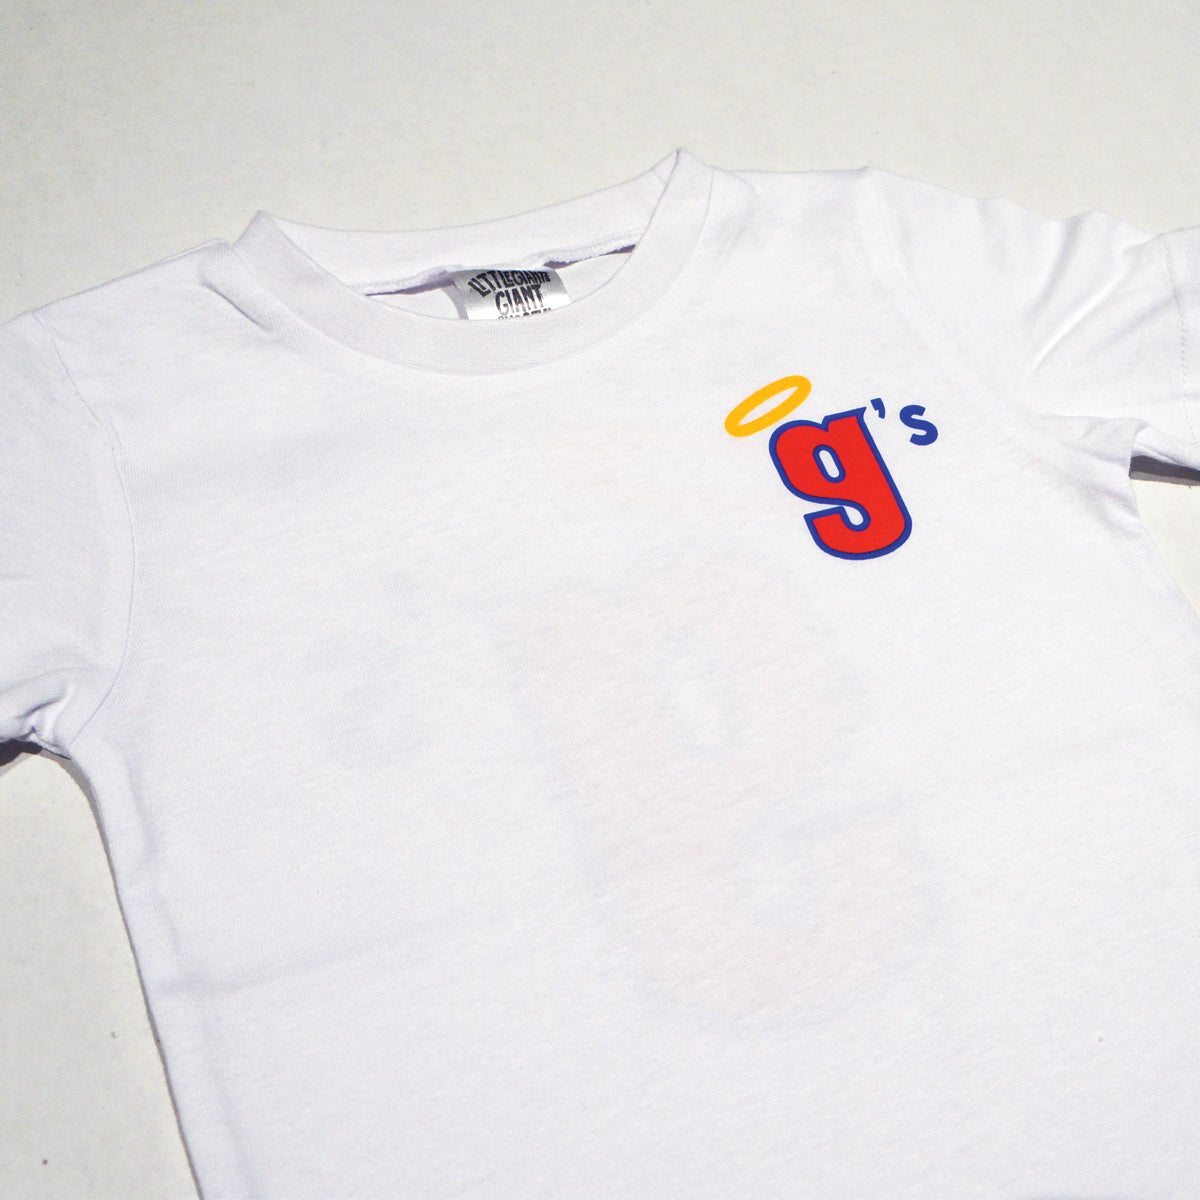 Halo Little g's T-shirt (White)